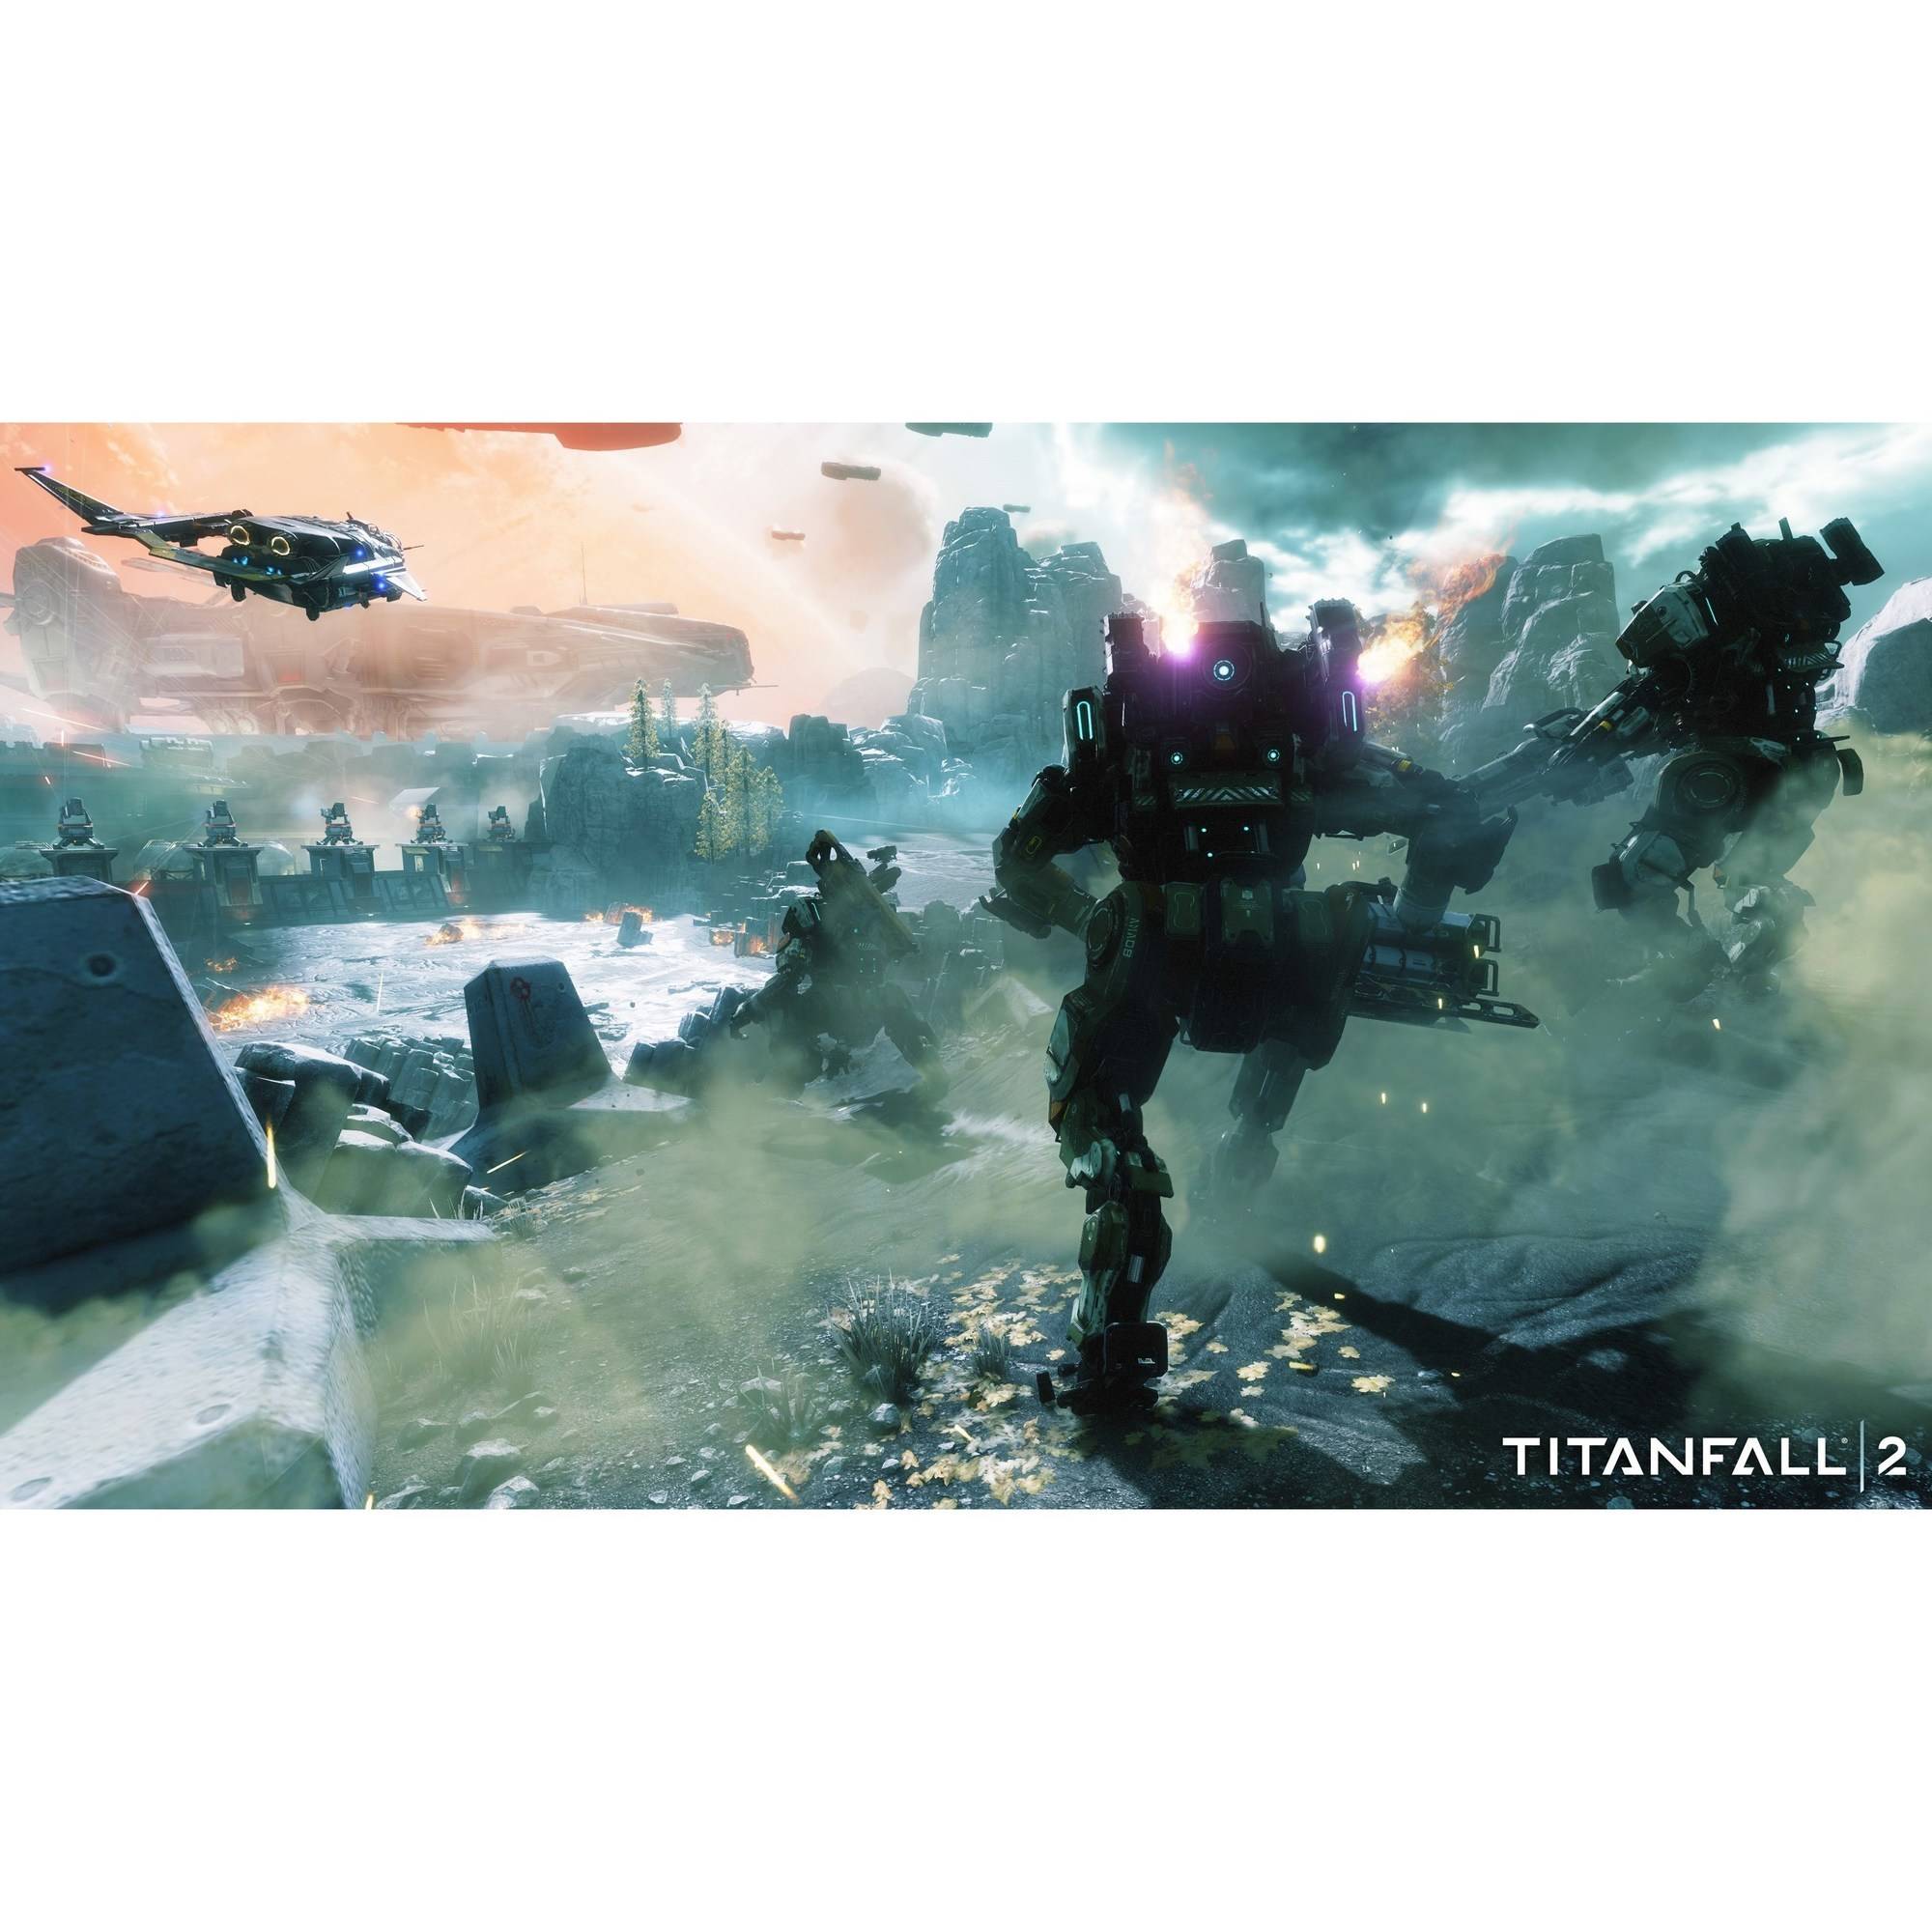 Titanfall 2, Electronic Arts, Xbox One, 014633368758 - image 5 of 8